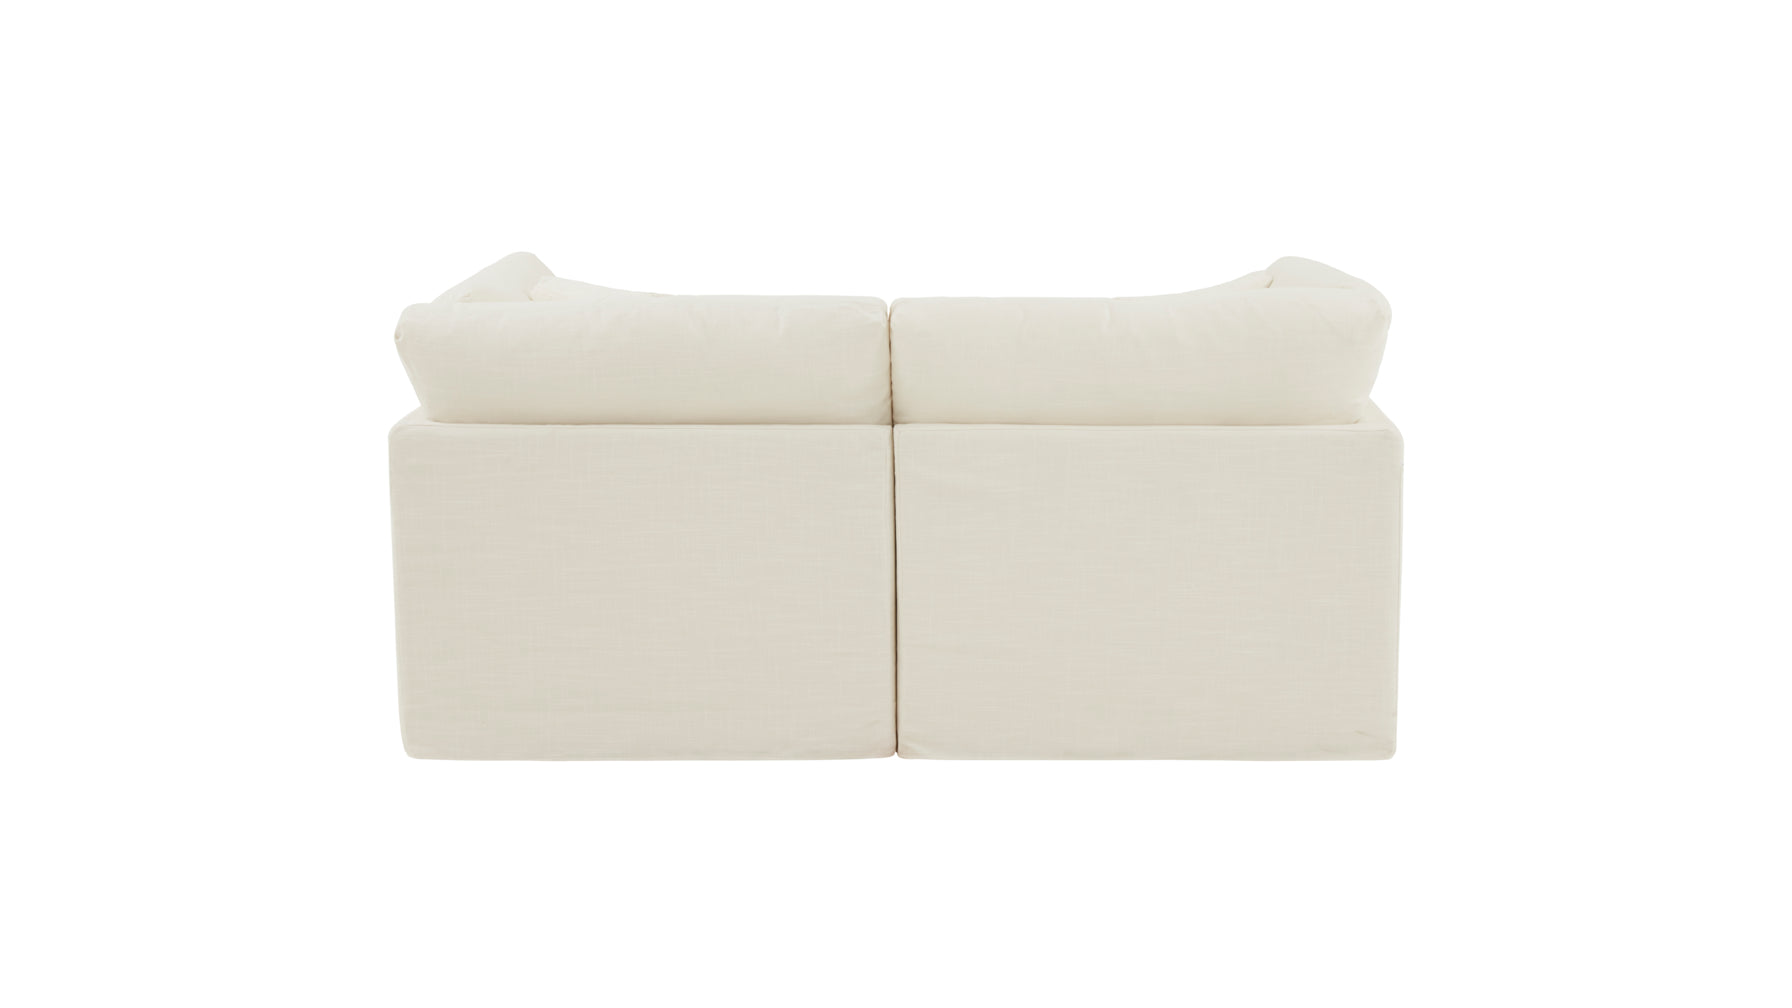 Get Together™ 2-Piece Modular Sofa, Standard, Cream Linen - Image 7